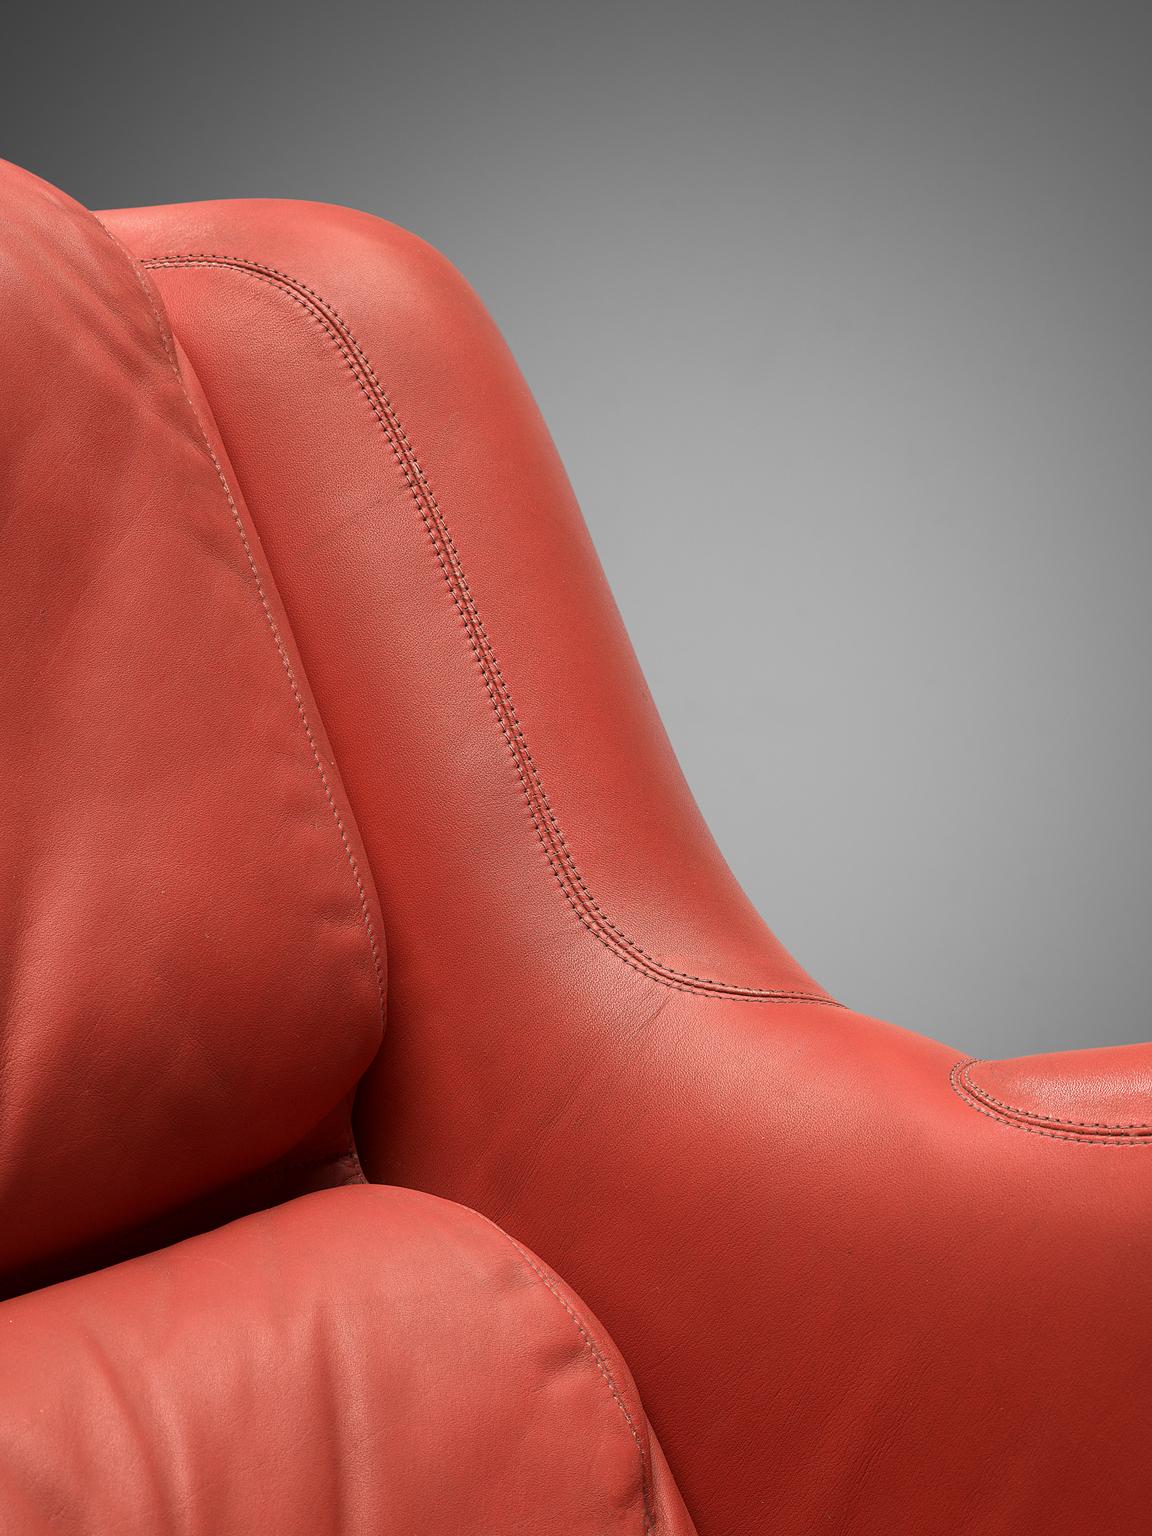 Yrjo Kukkapuro 'Karuselli' Lounge Chair in Red Leather In Good Condition In Waalwijk, NL